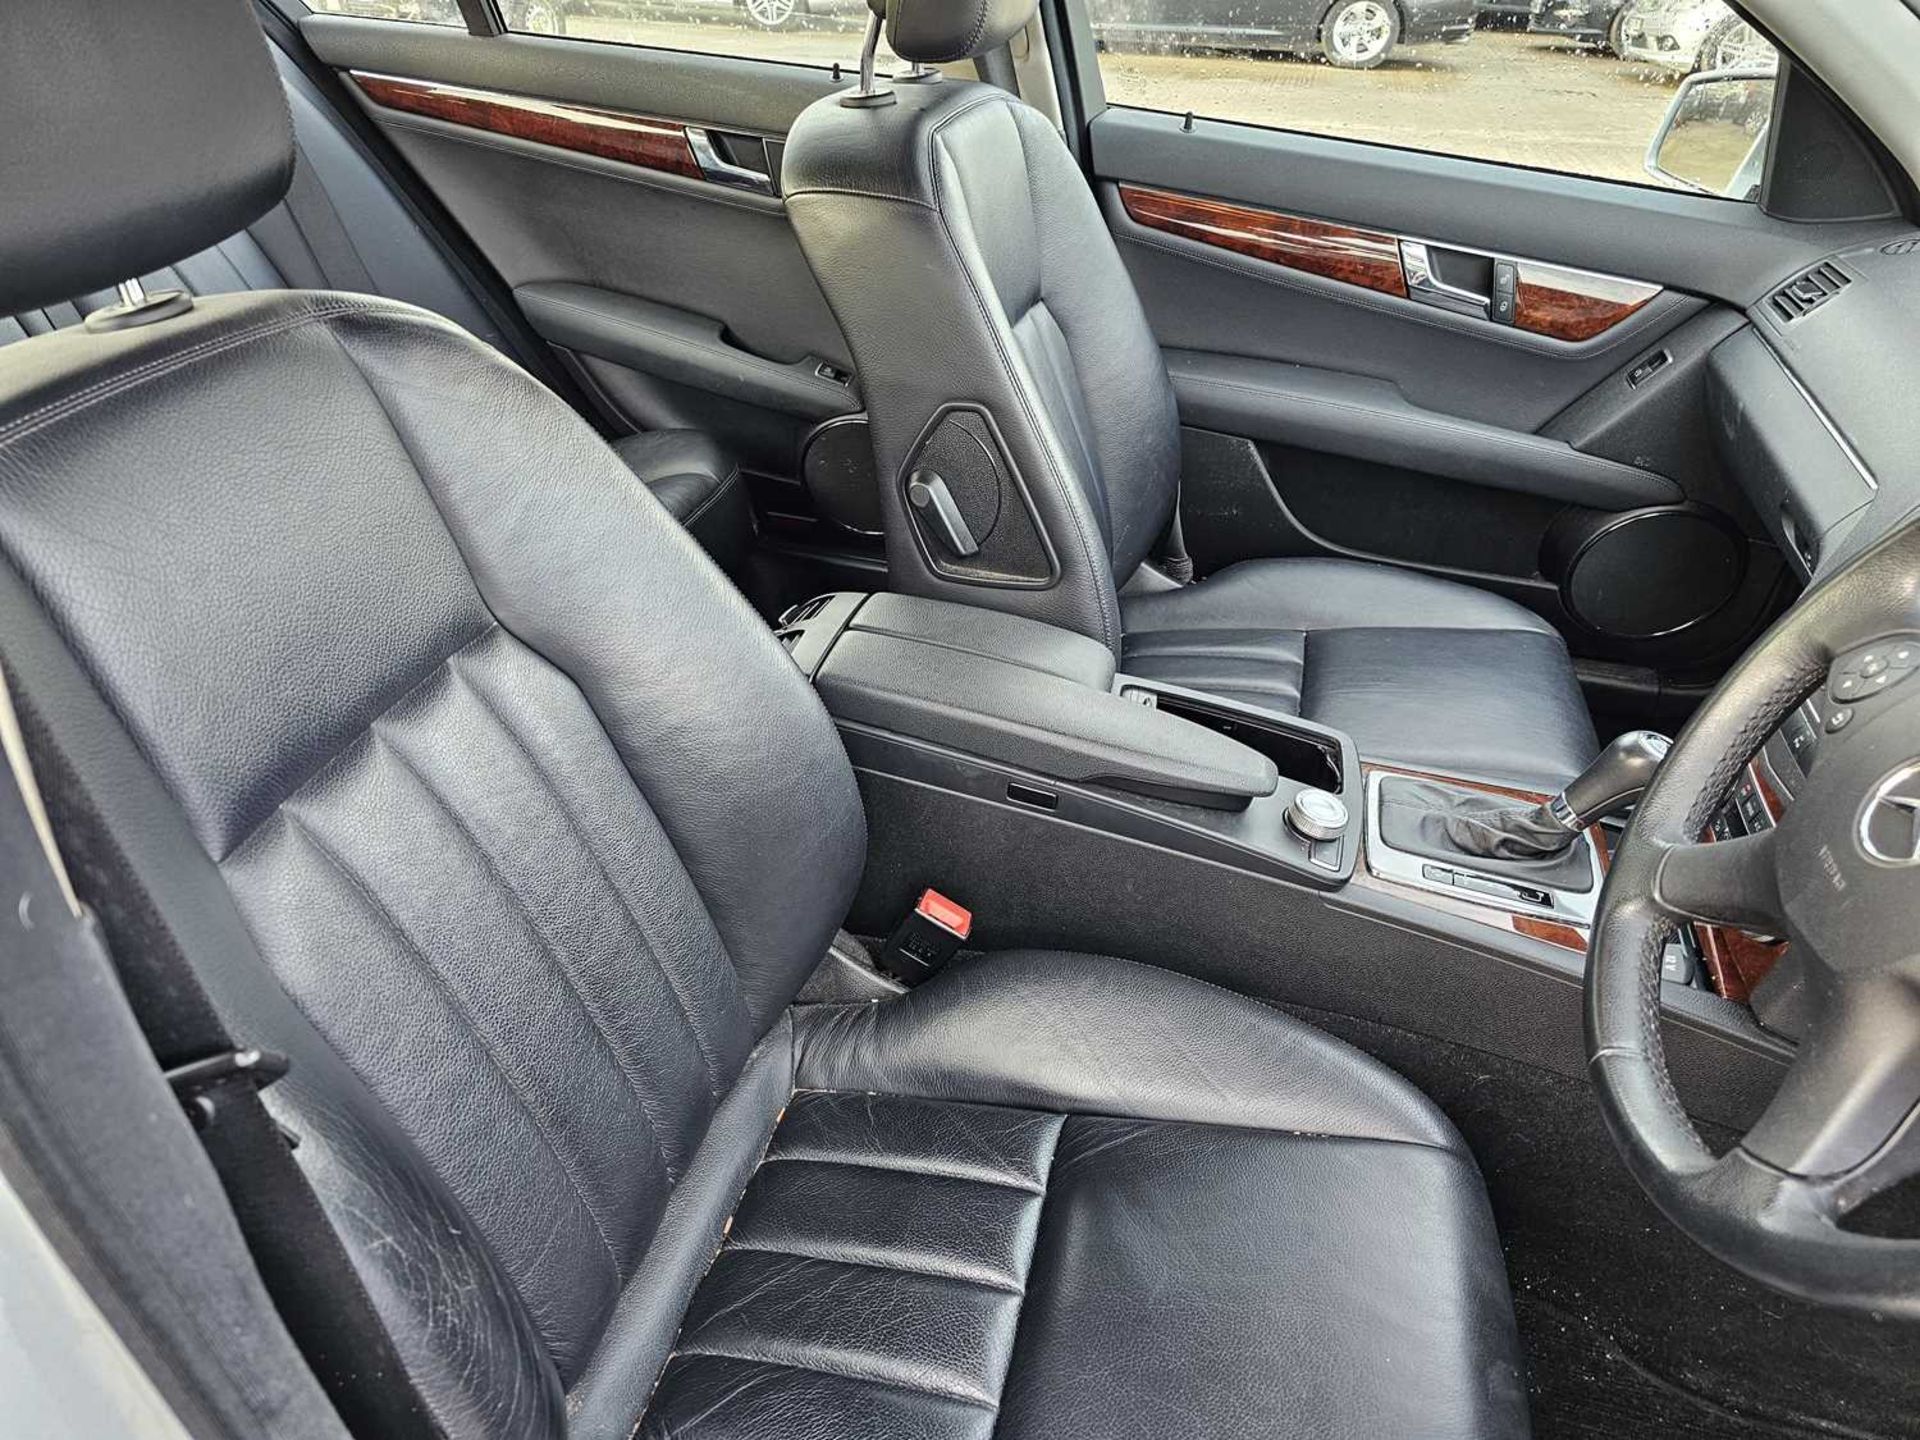 2011 Mercedes C250 Avantgarde CDi, Auto, Parking Sensors, Full Leather, Heated Electric Seats, Bluet - Image 23 of 28